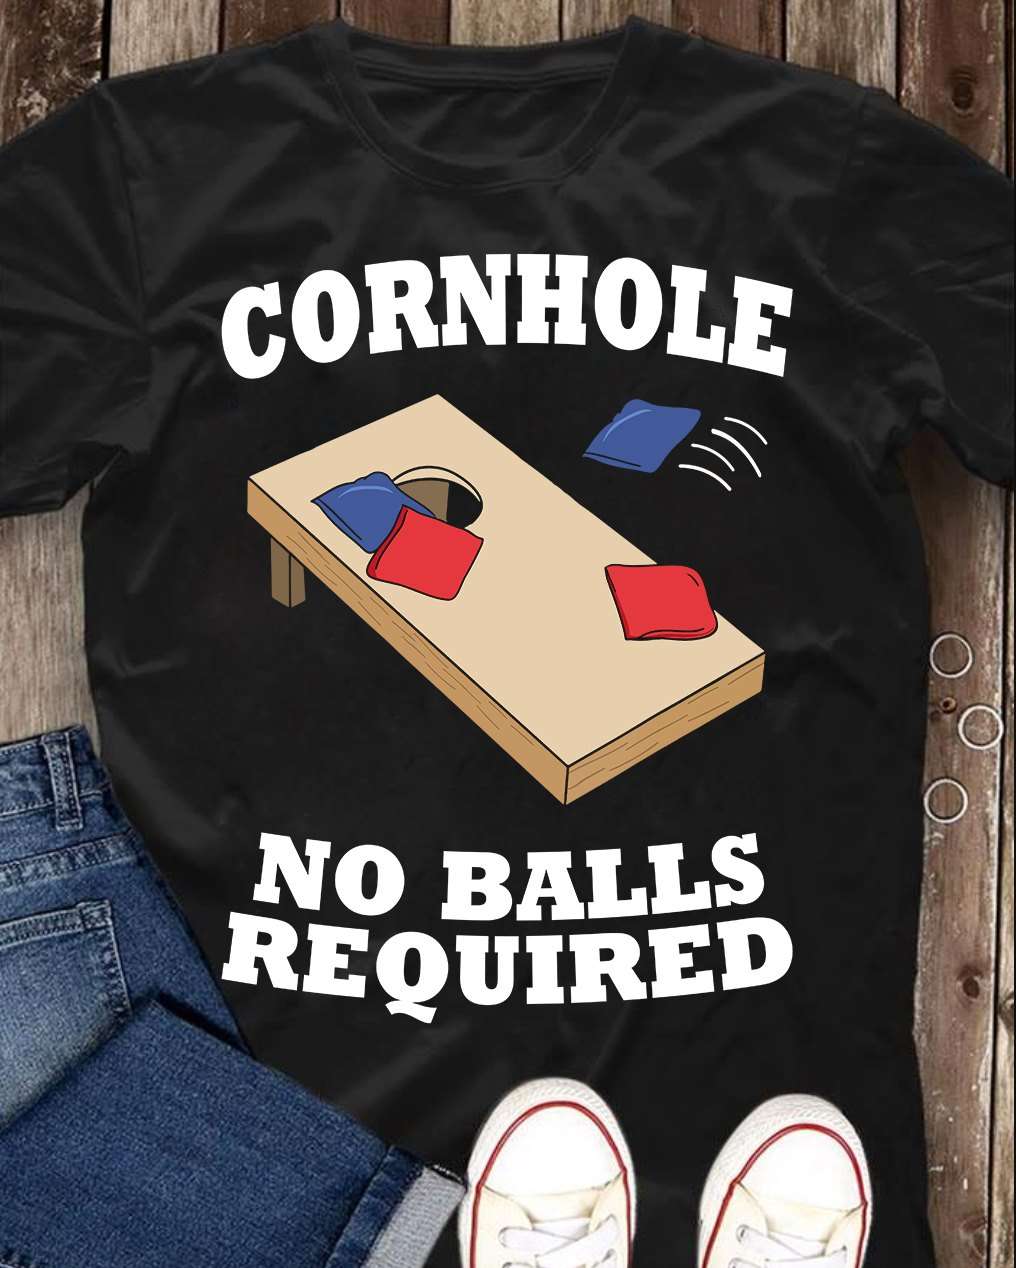 Corbhole Game - Cornhole no balls required